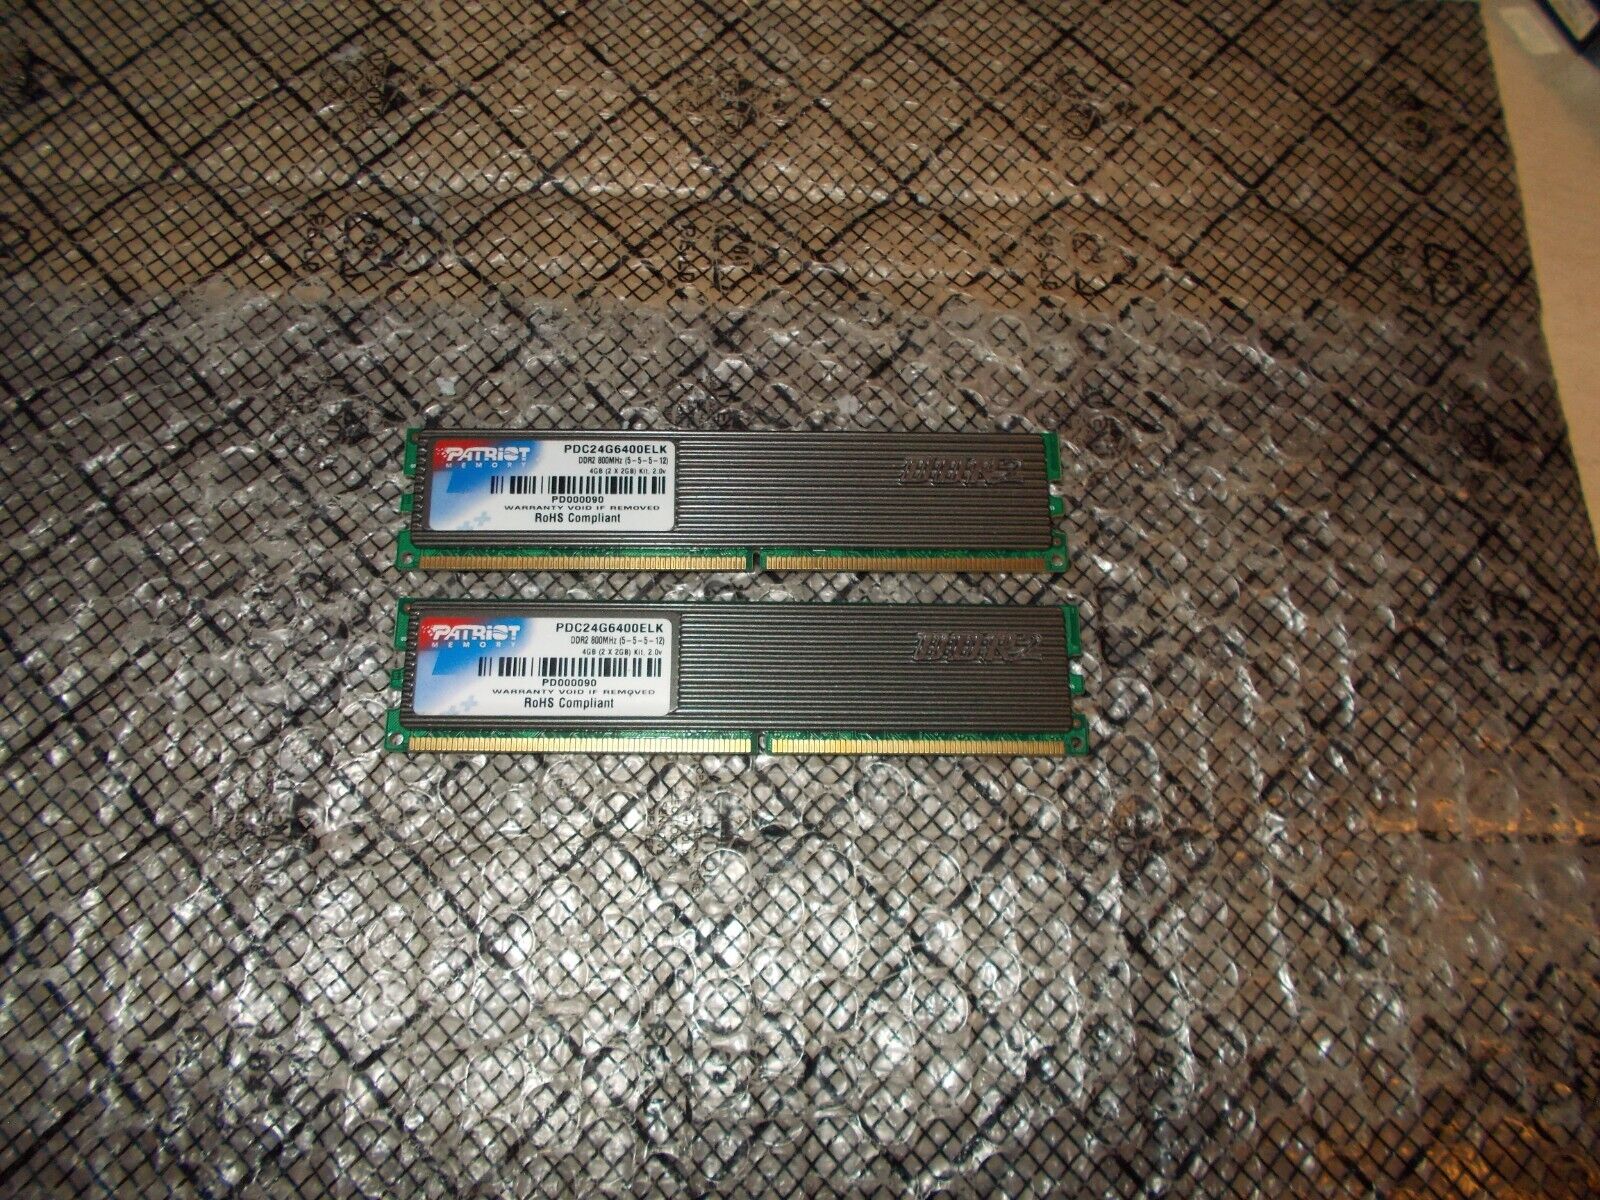 4GB (2GBx2) Patriot PC2-6400 800mhz NON ECC DDR2 PDC24G6400ELK